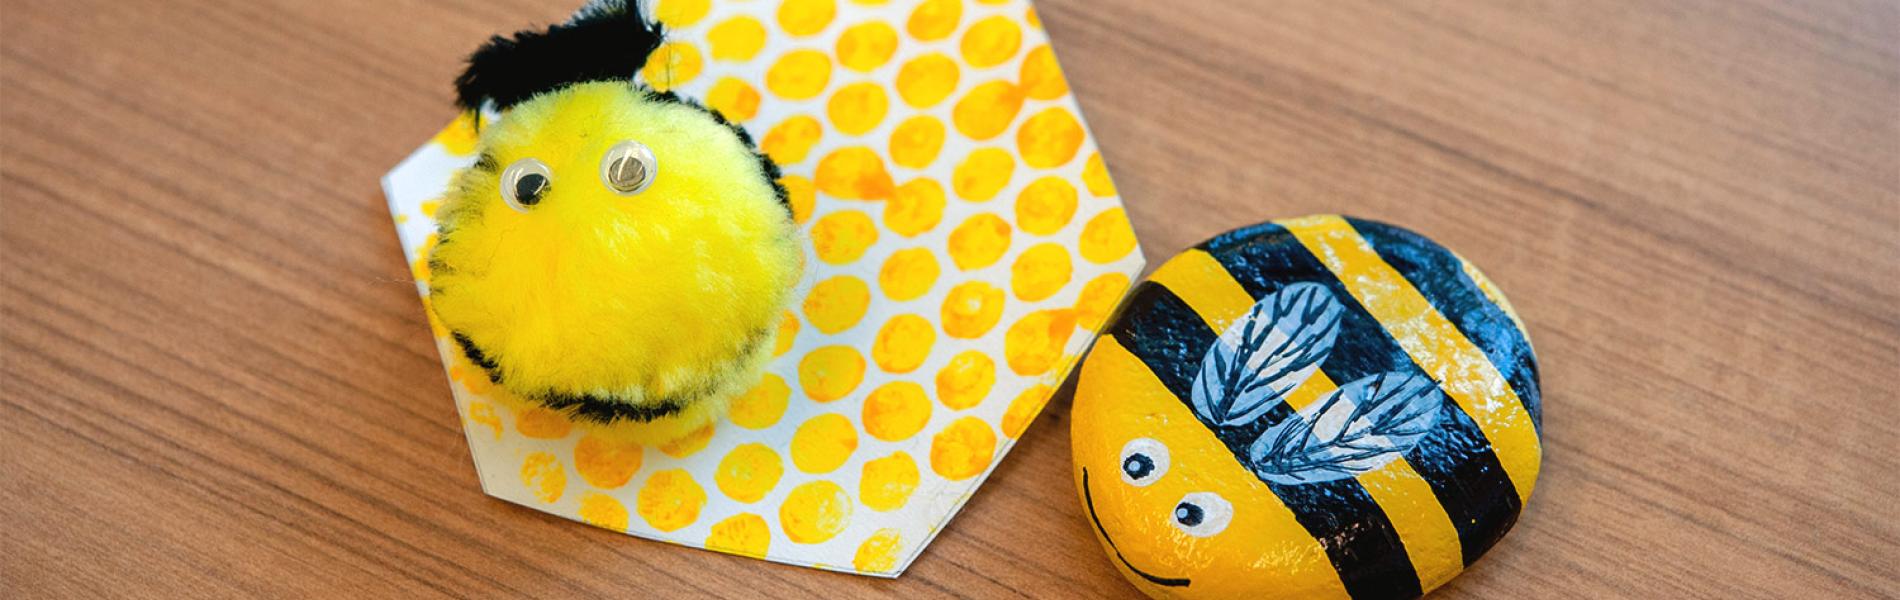 Bee City Childrens Crafts